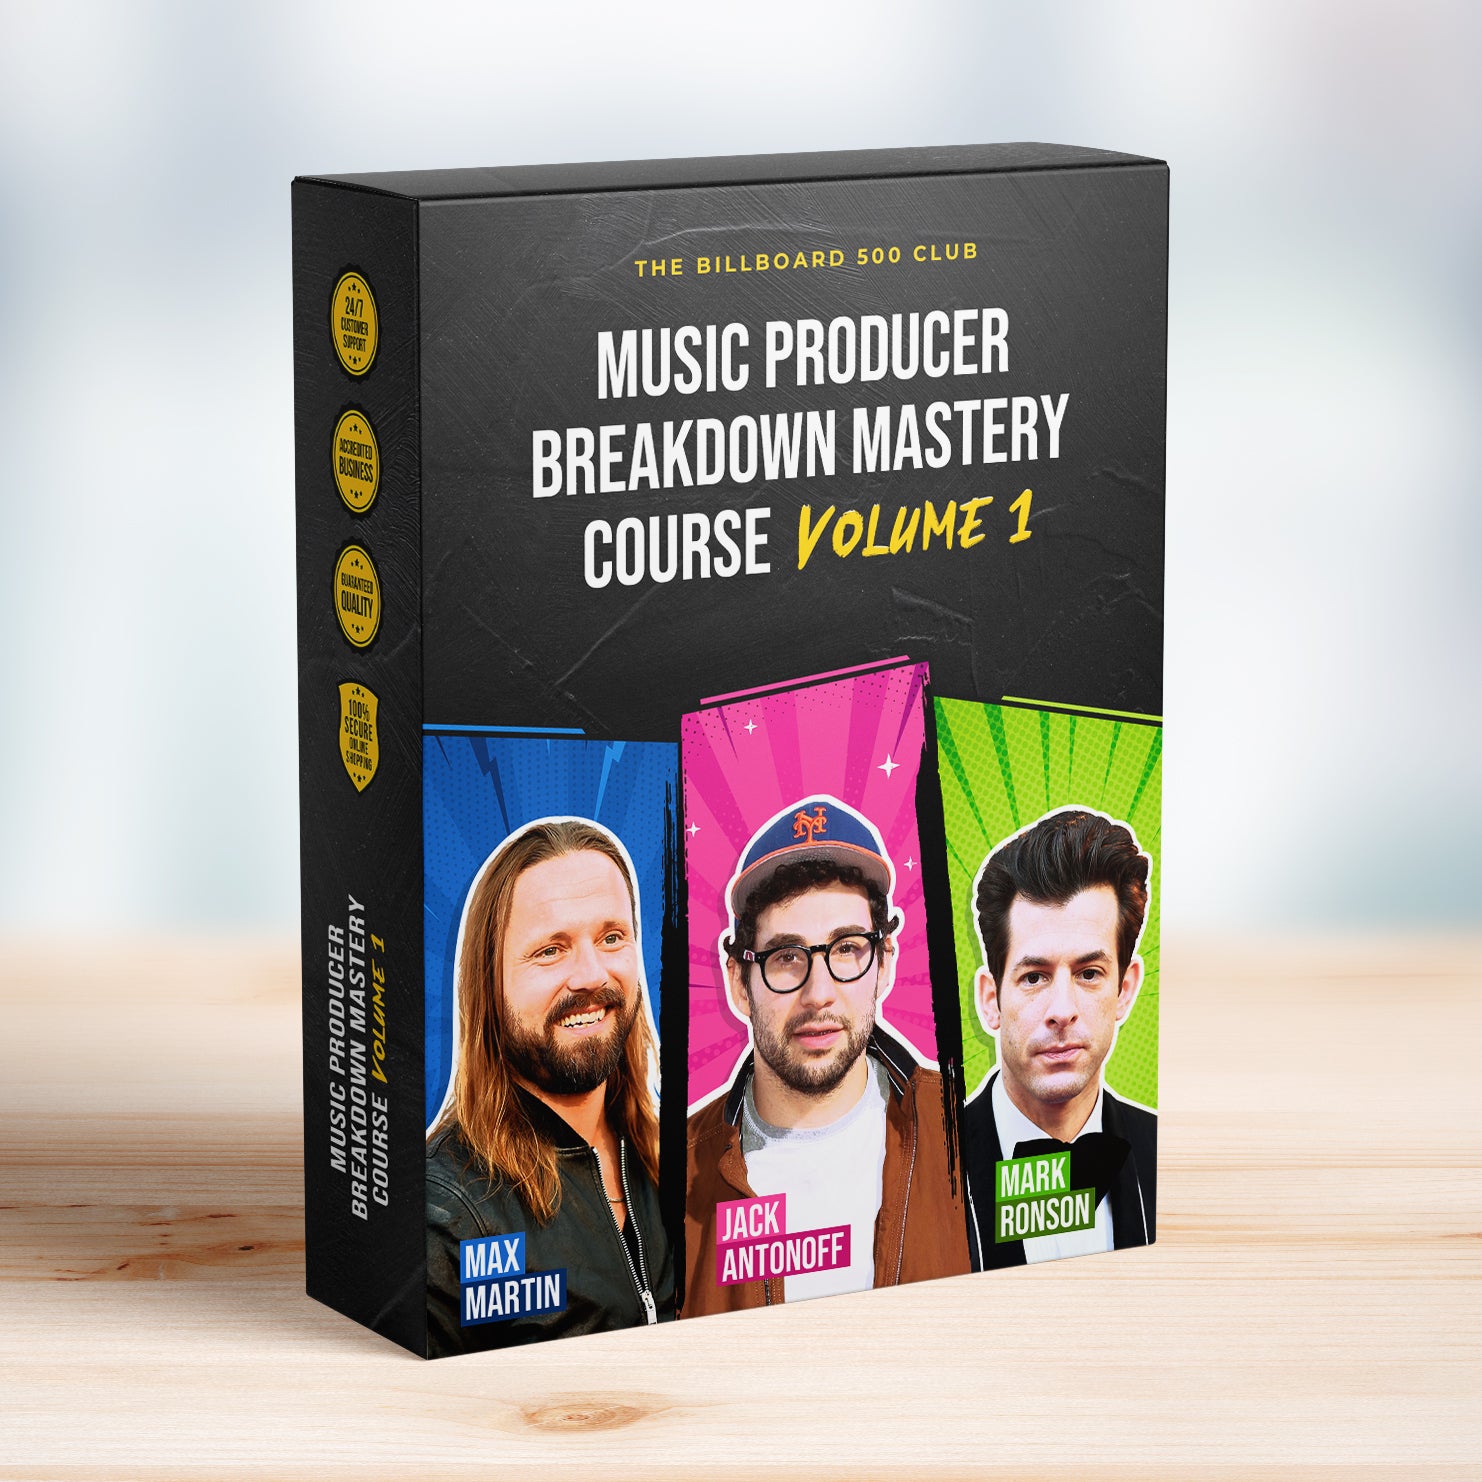 Music Producer Breakdown Mastery Course Volume 1 - Max Martin, Jack Antonoff & Mark Ronson - The Billboard 500 Club